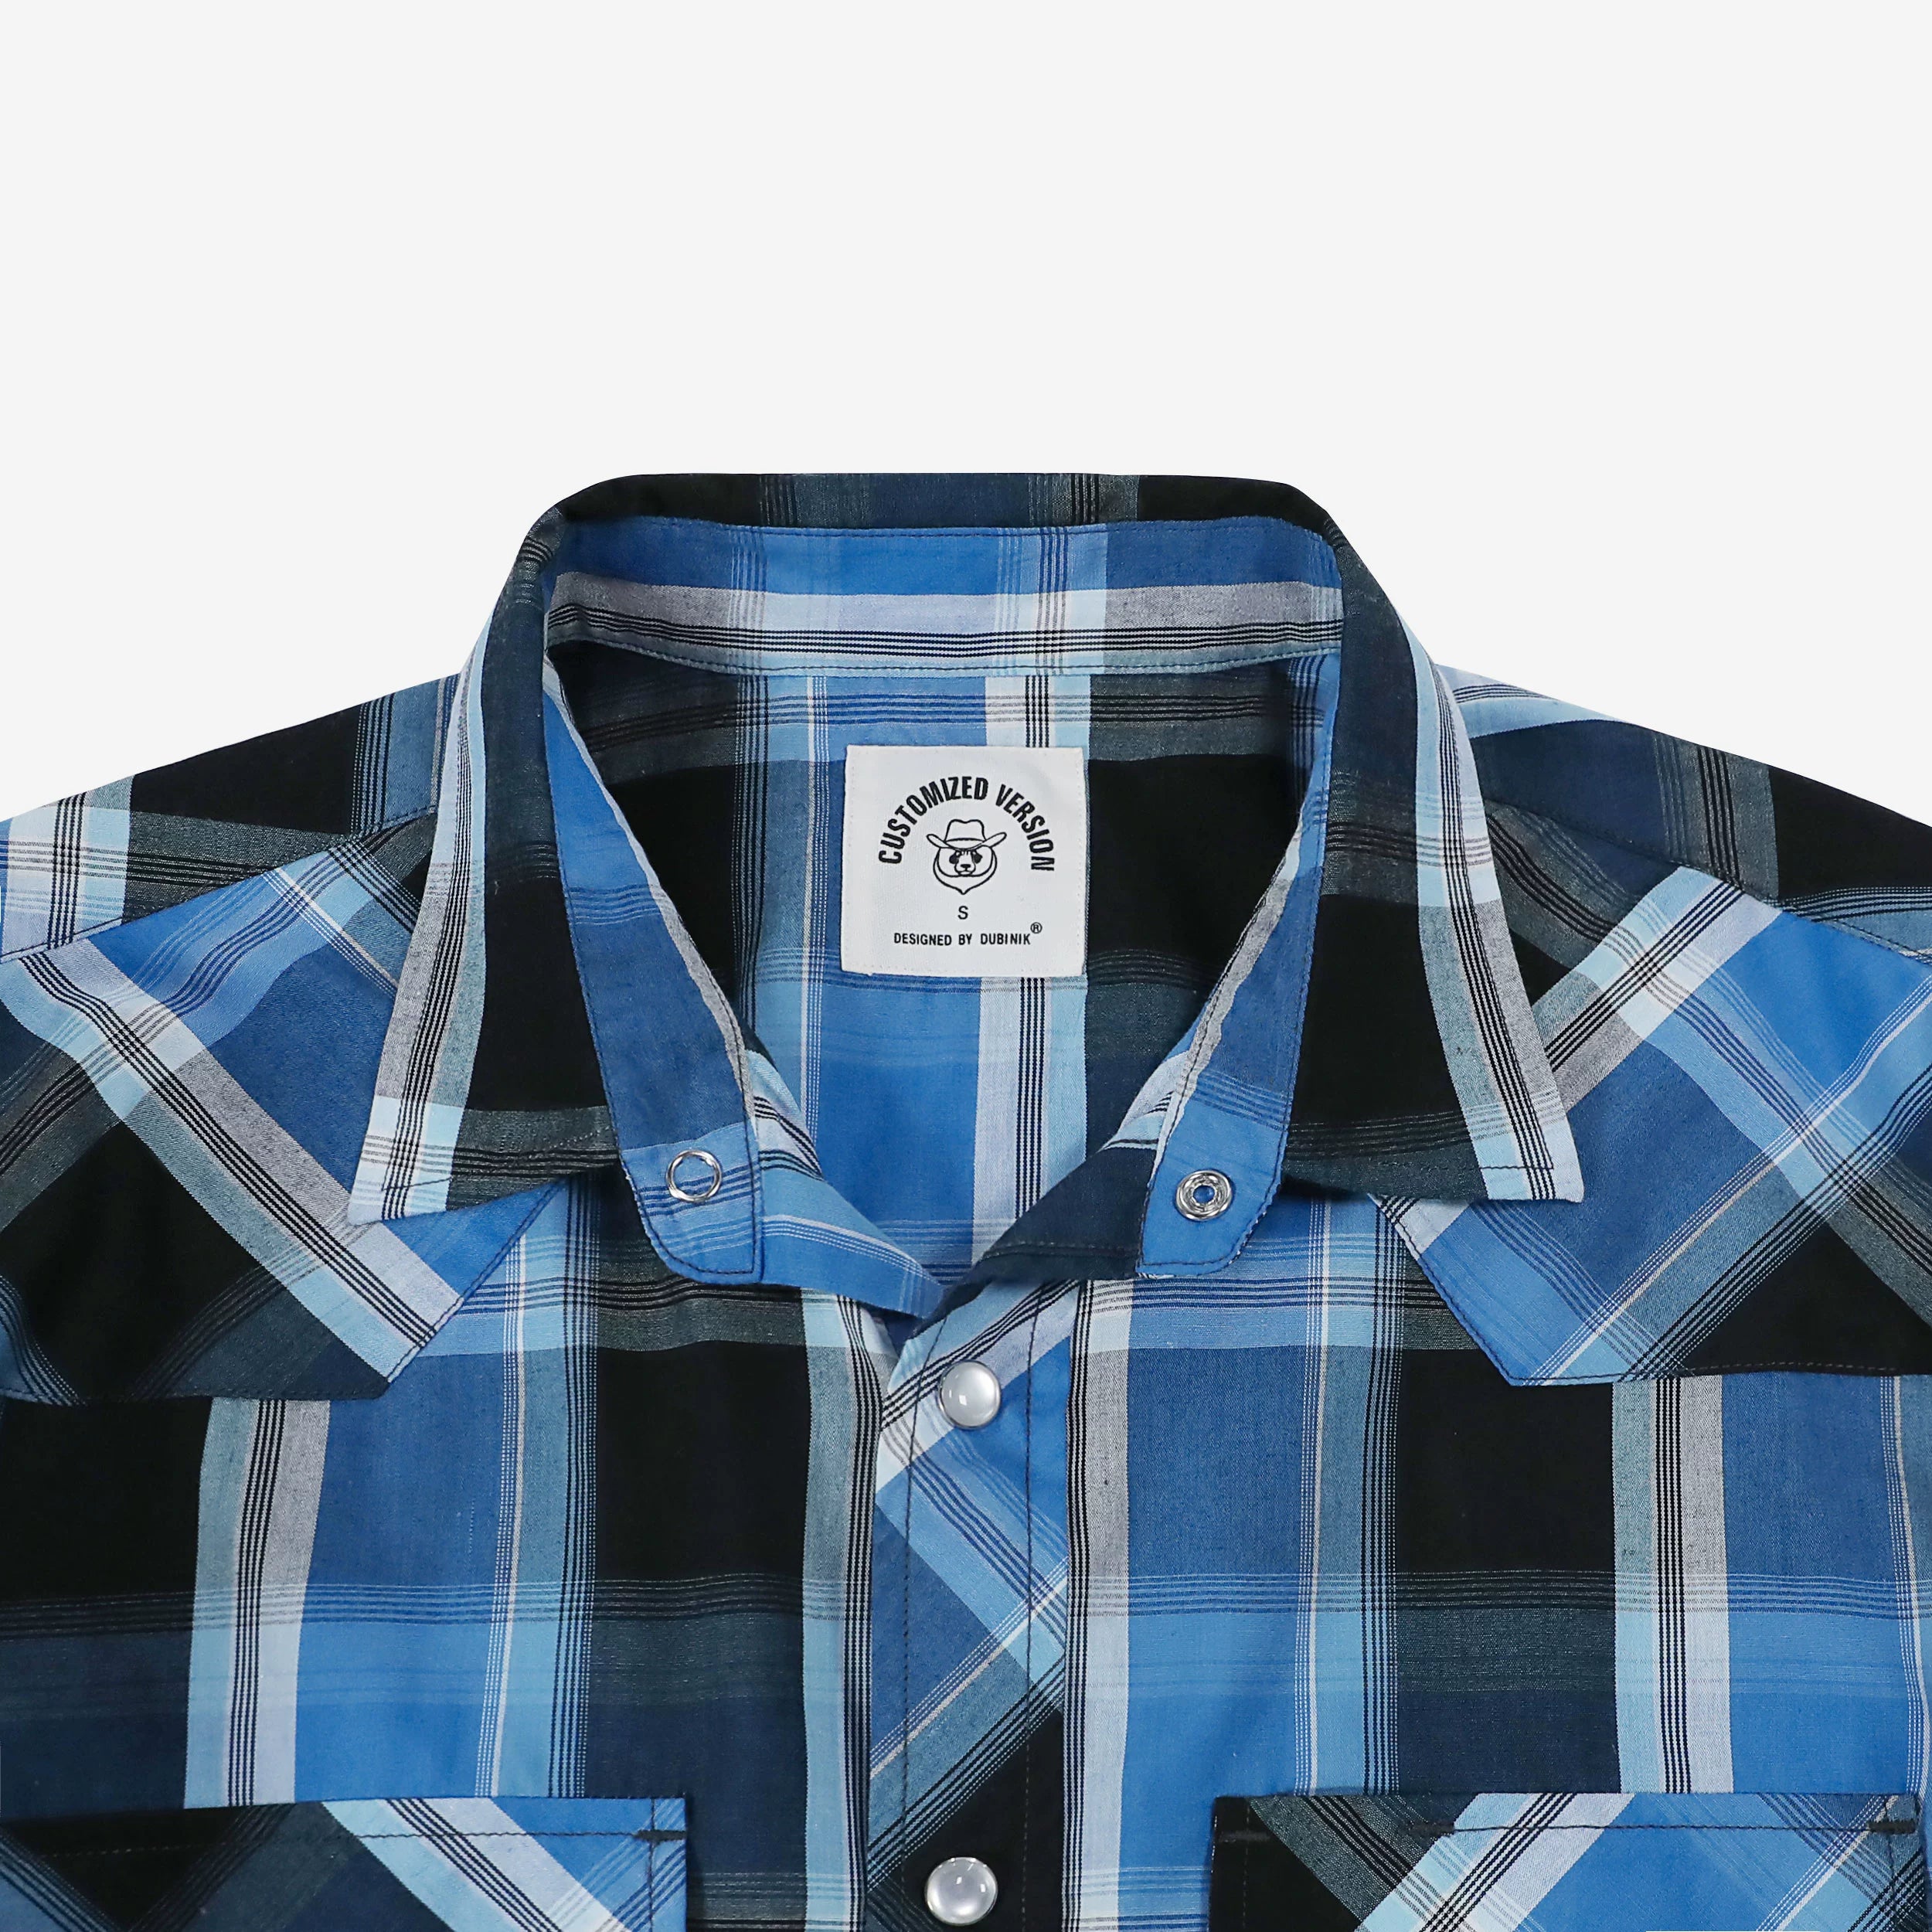 Dubinik® Pearl Snap Shirts for Men Long Sleeve Western Shirts for Men Vintage Casual Plaid Shirt Cowboy Shirts for Men#42019